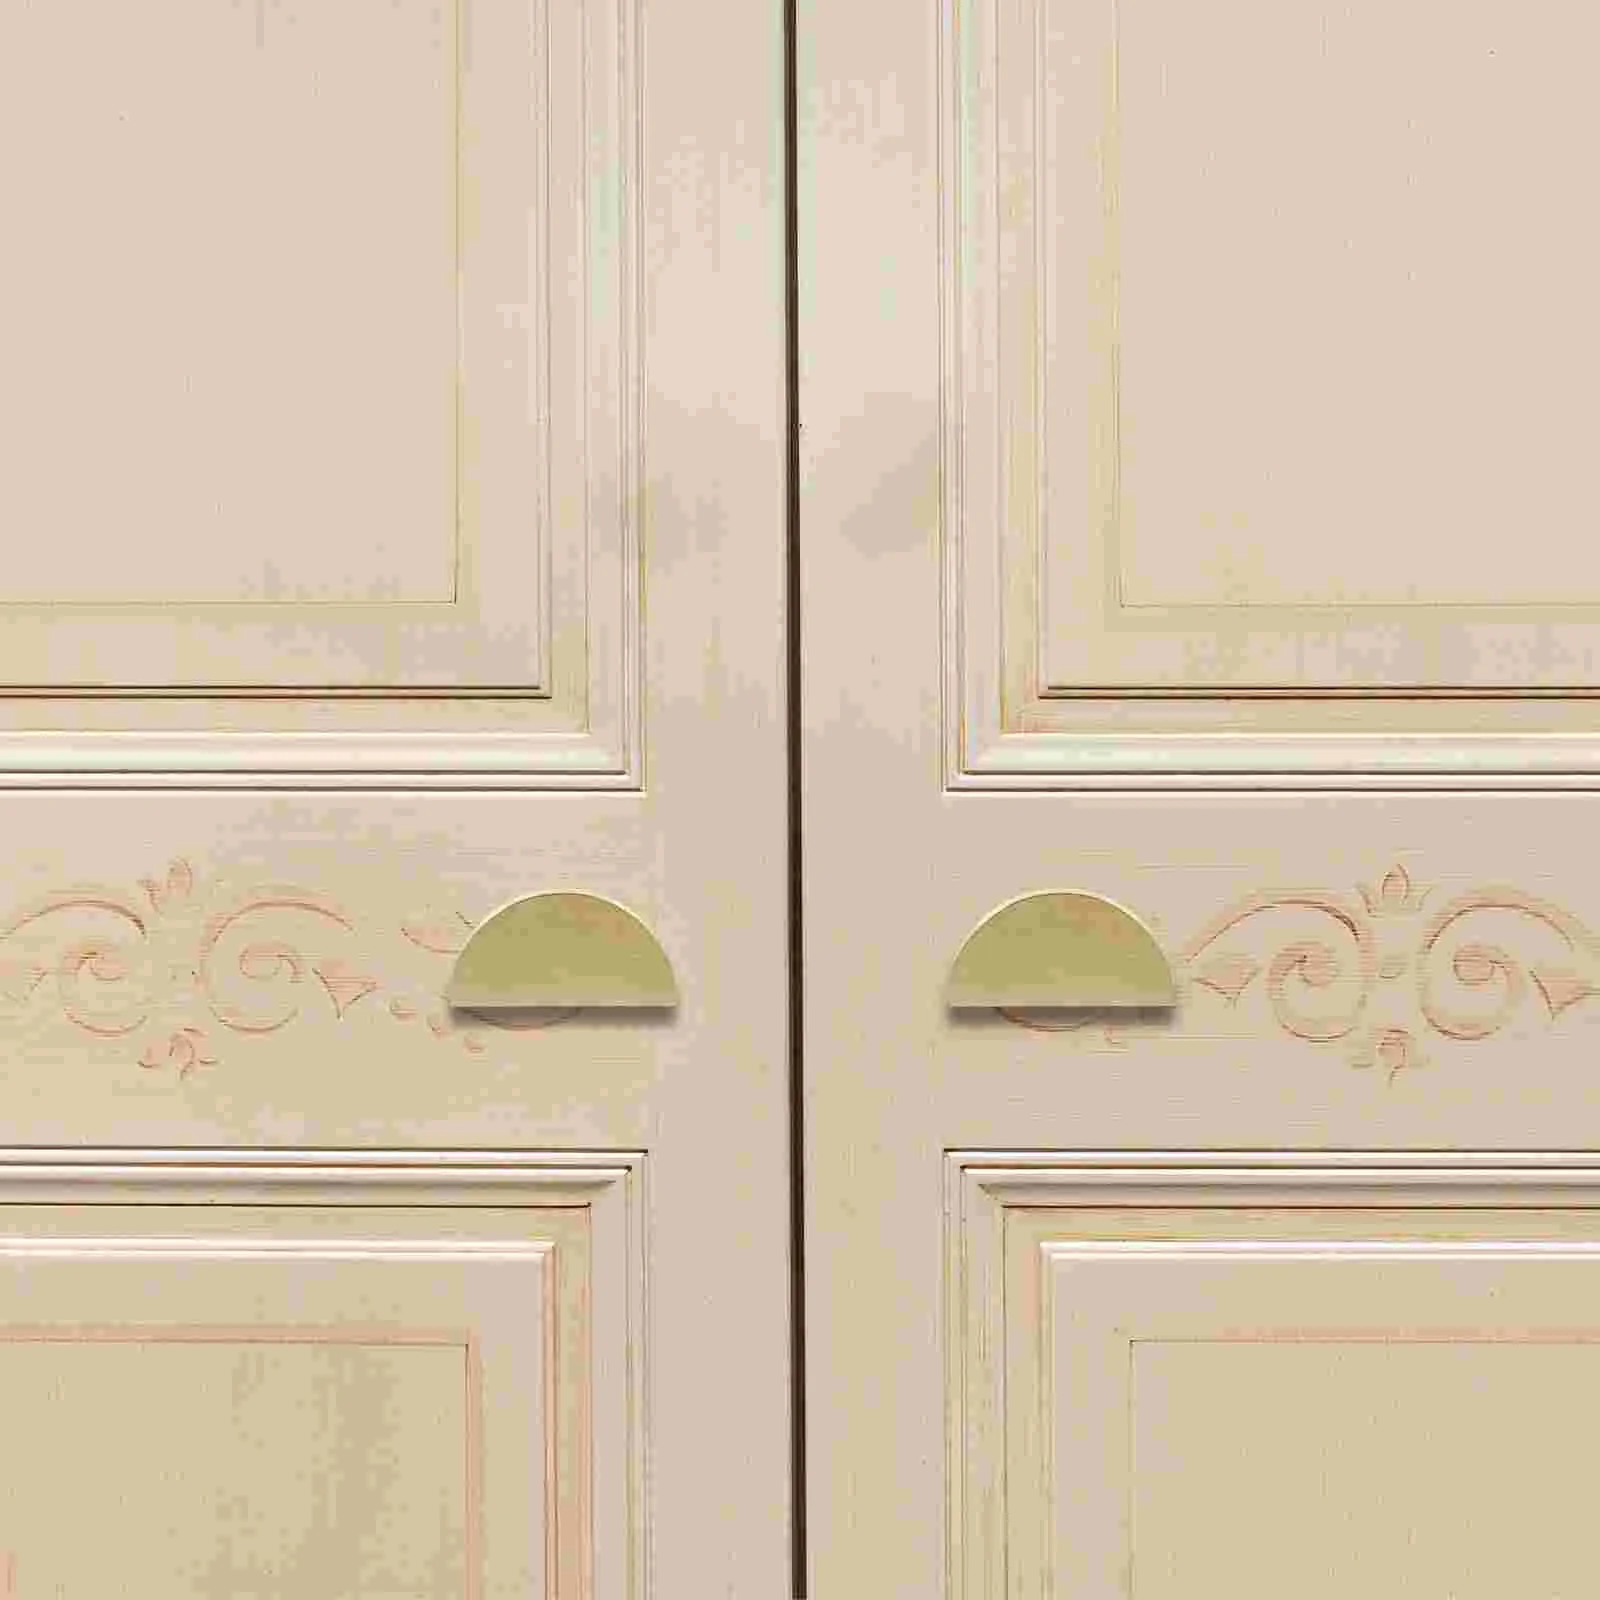 

5 Pcs Drawer Handle Dresser for Closet Door Knob Cabinet Knobs Pulls Wardrobe Cabinets Copper Small Handles Decorative